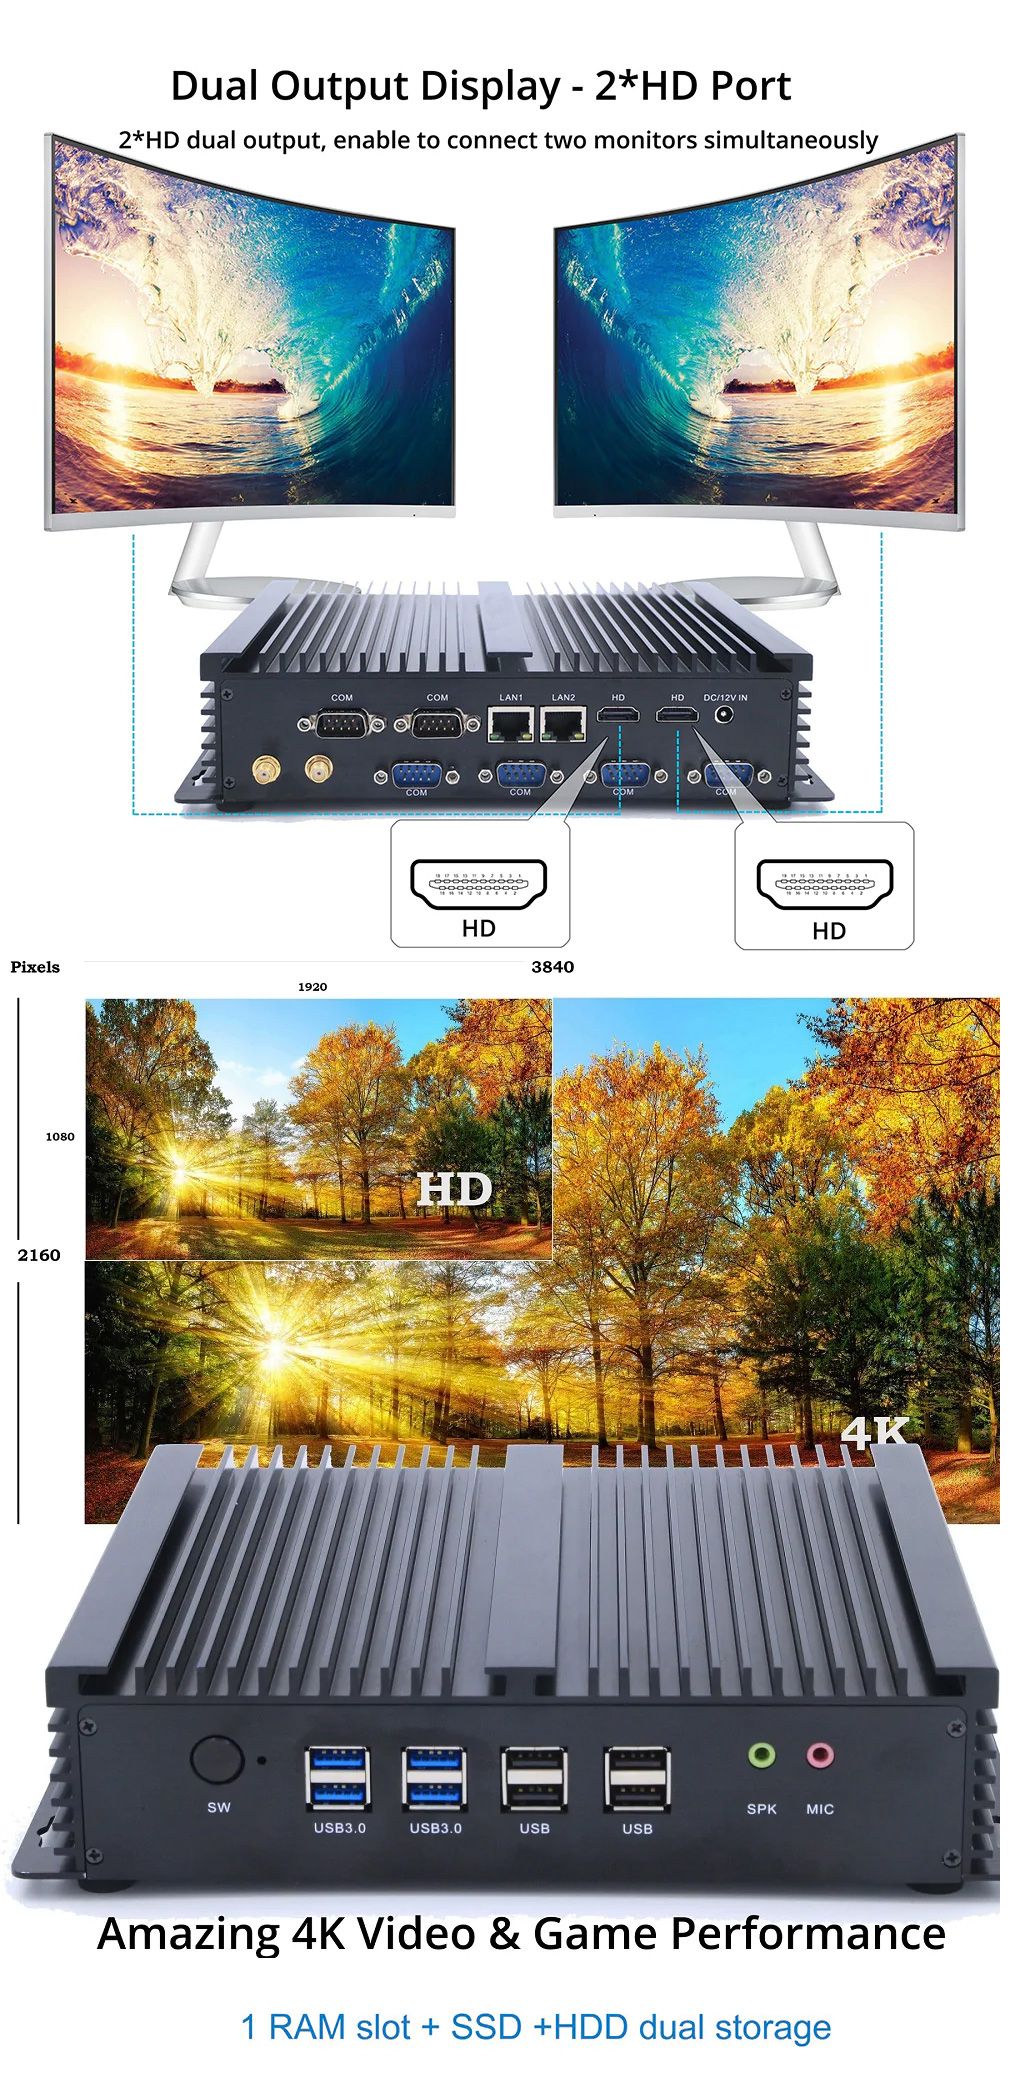 Eglobal-GK-Mini-Pc-Celeron-N2955U-DDR3-Intel-core-HD-Graphics-Dual-core-Barebone-14GHz--Fanless-Mini-1548804